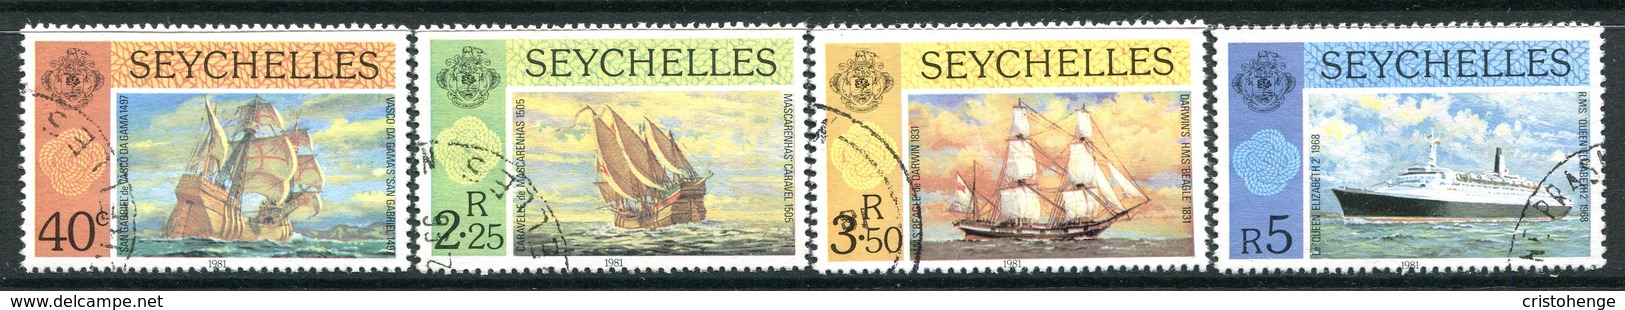 Seychelles 1981 Ships Set Used (SG 495-498) - Seychelles (1976-...)